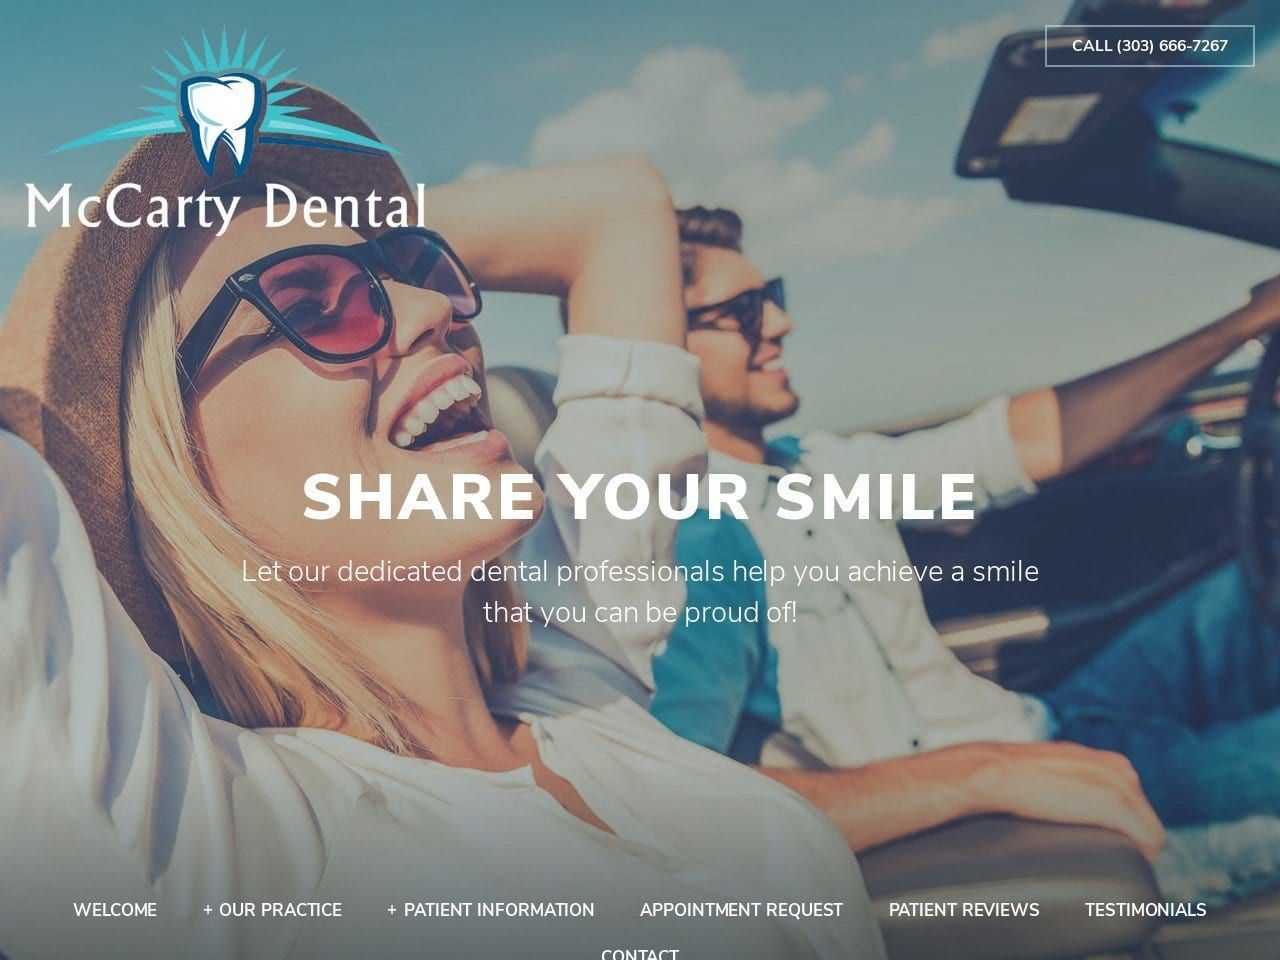 Mccarty Dental Website Screenshot from mccartydental.com